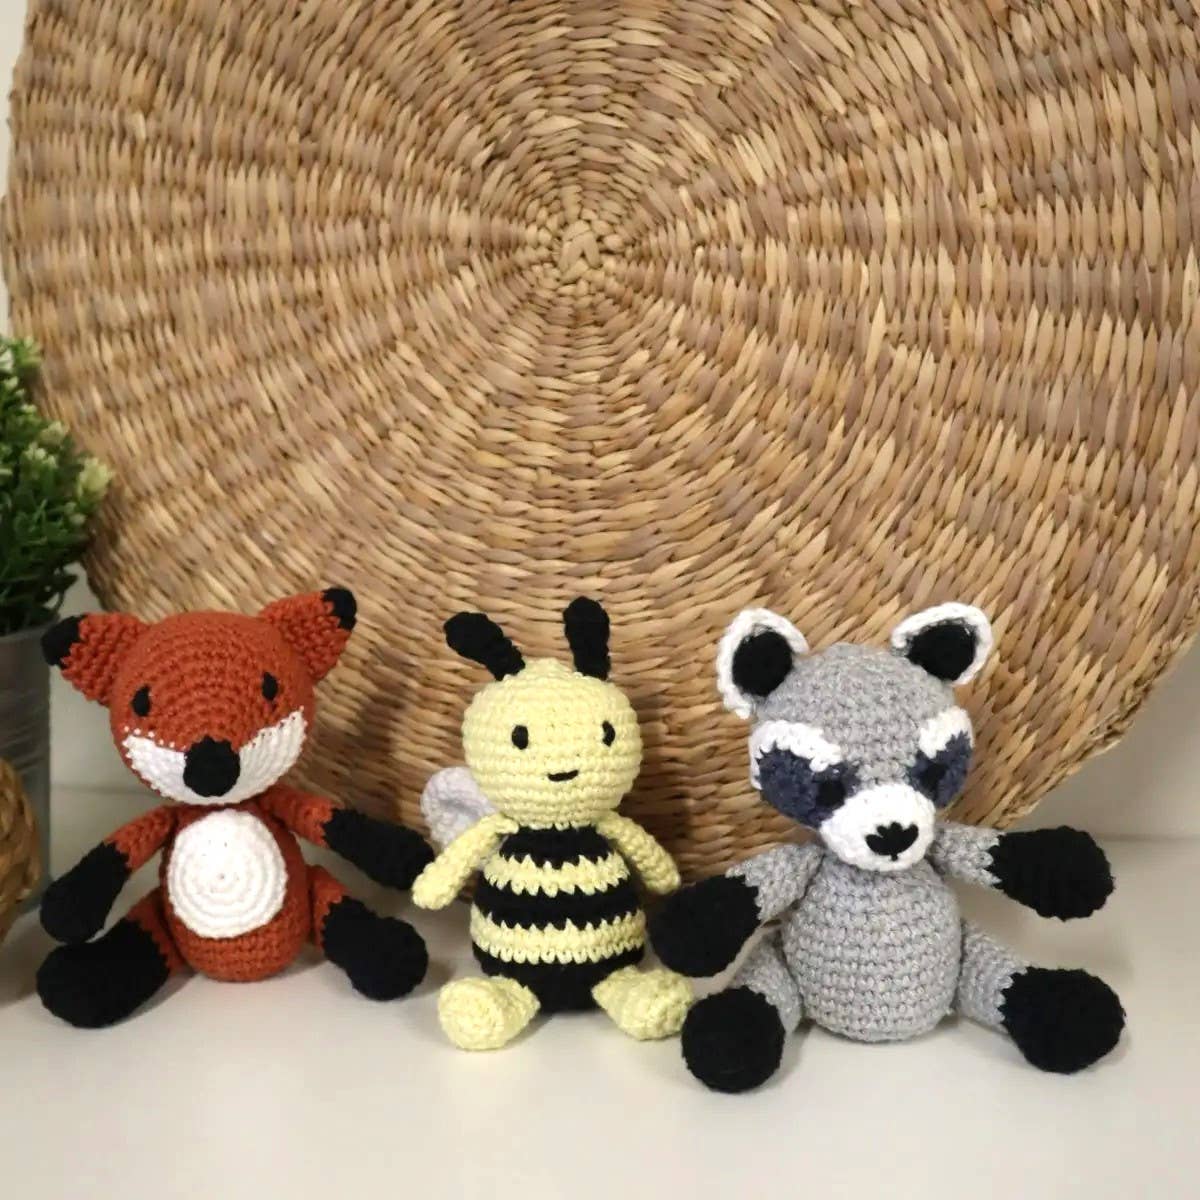 Hoooked Forest Friends - Crochet Kit